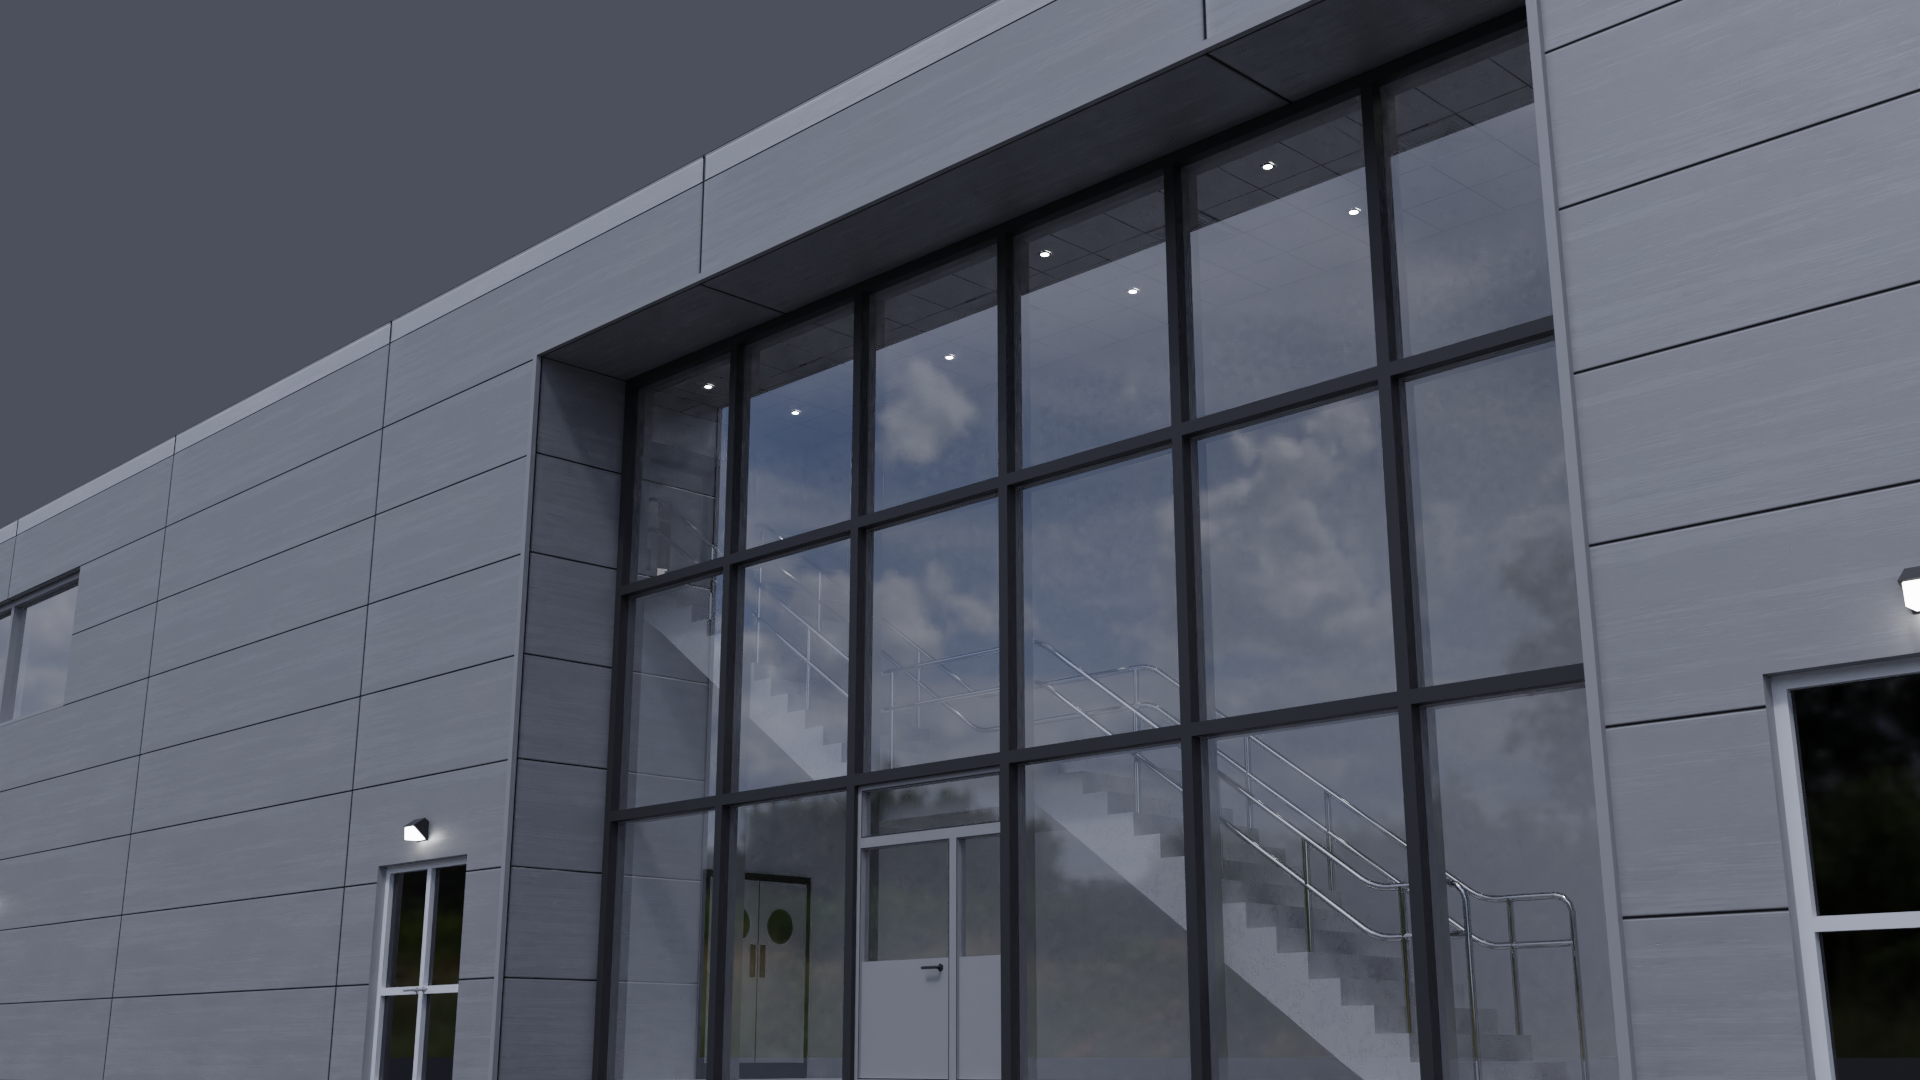 Pyreegue Announces Glasgow Airport for MSFS - Microsoft Flight Simulator, PYREEGUE Dev Co